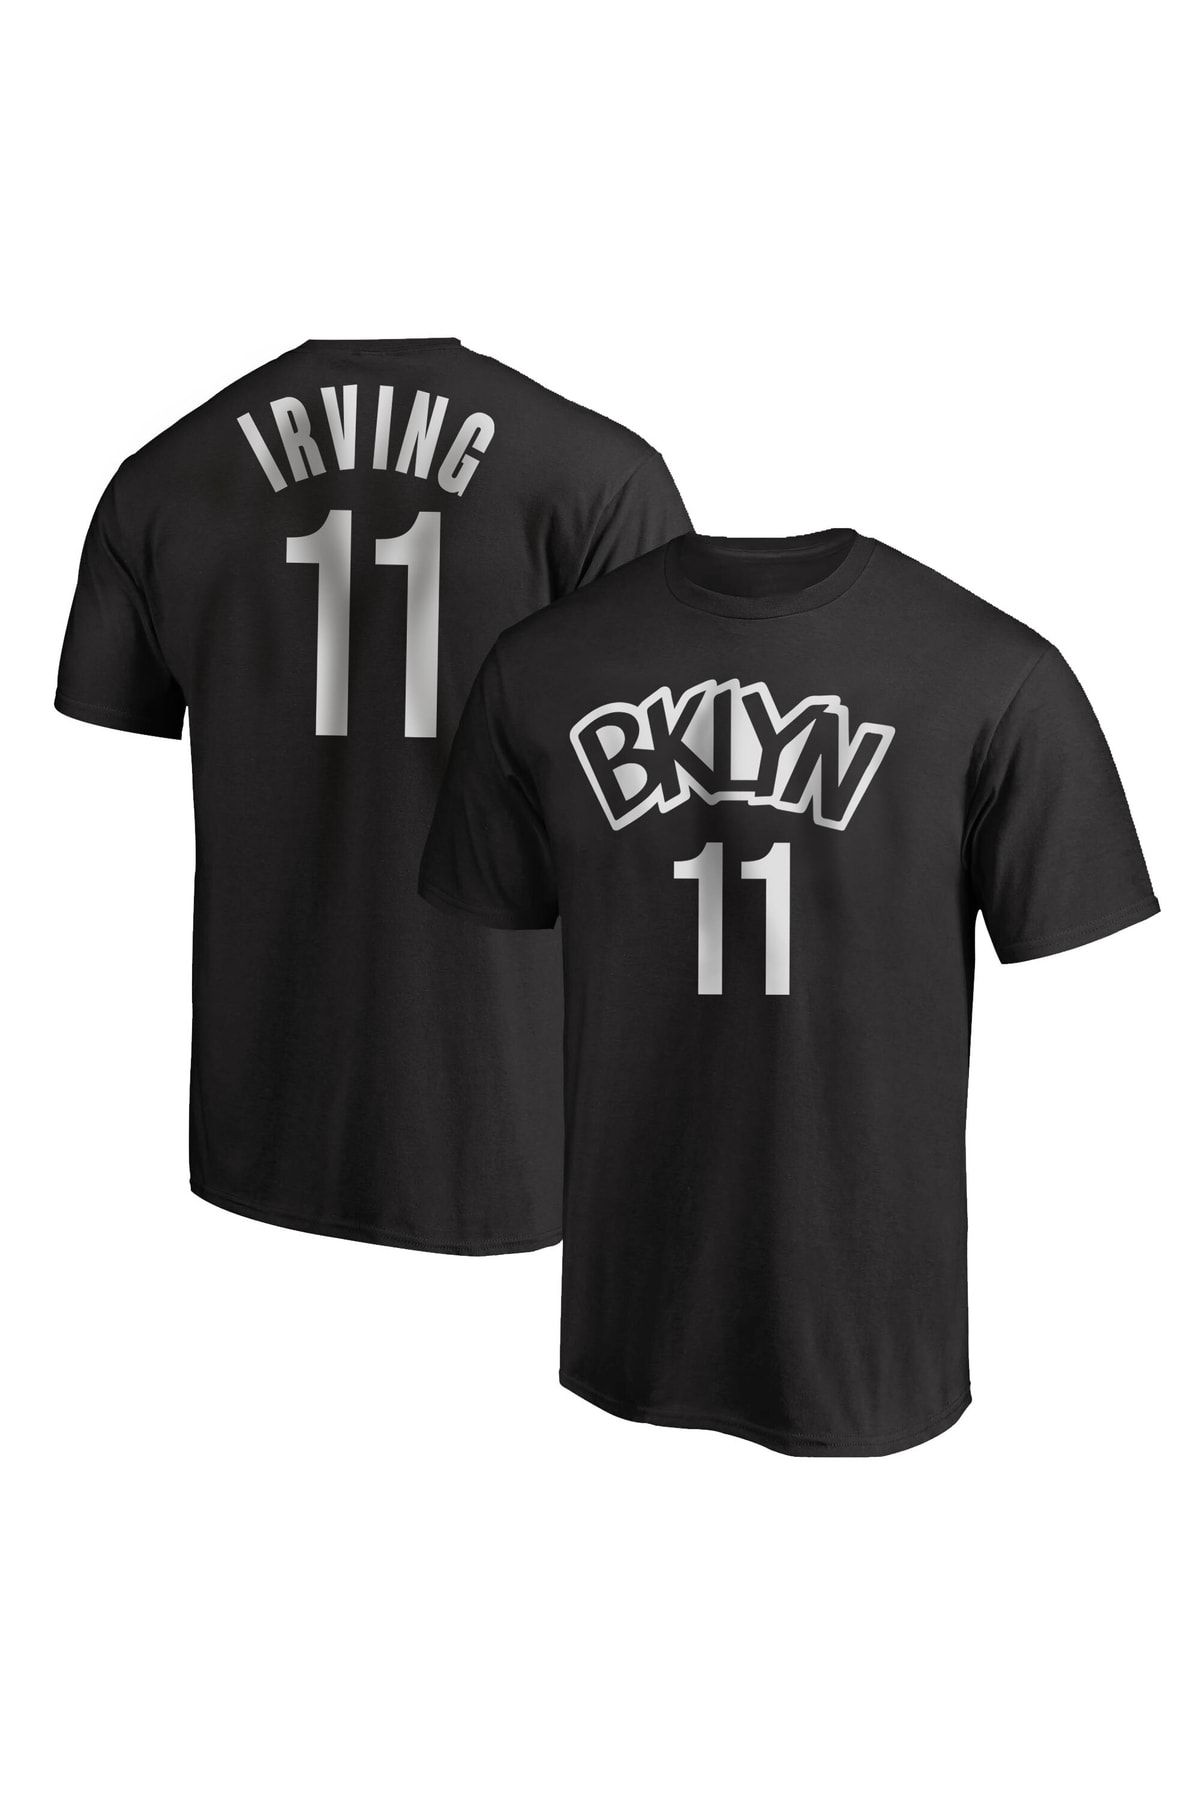 Usateamfans Brooklyn Kyrie Irving Tshirt